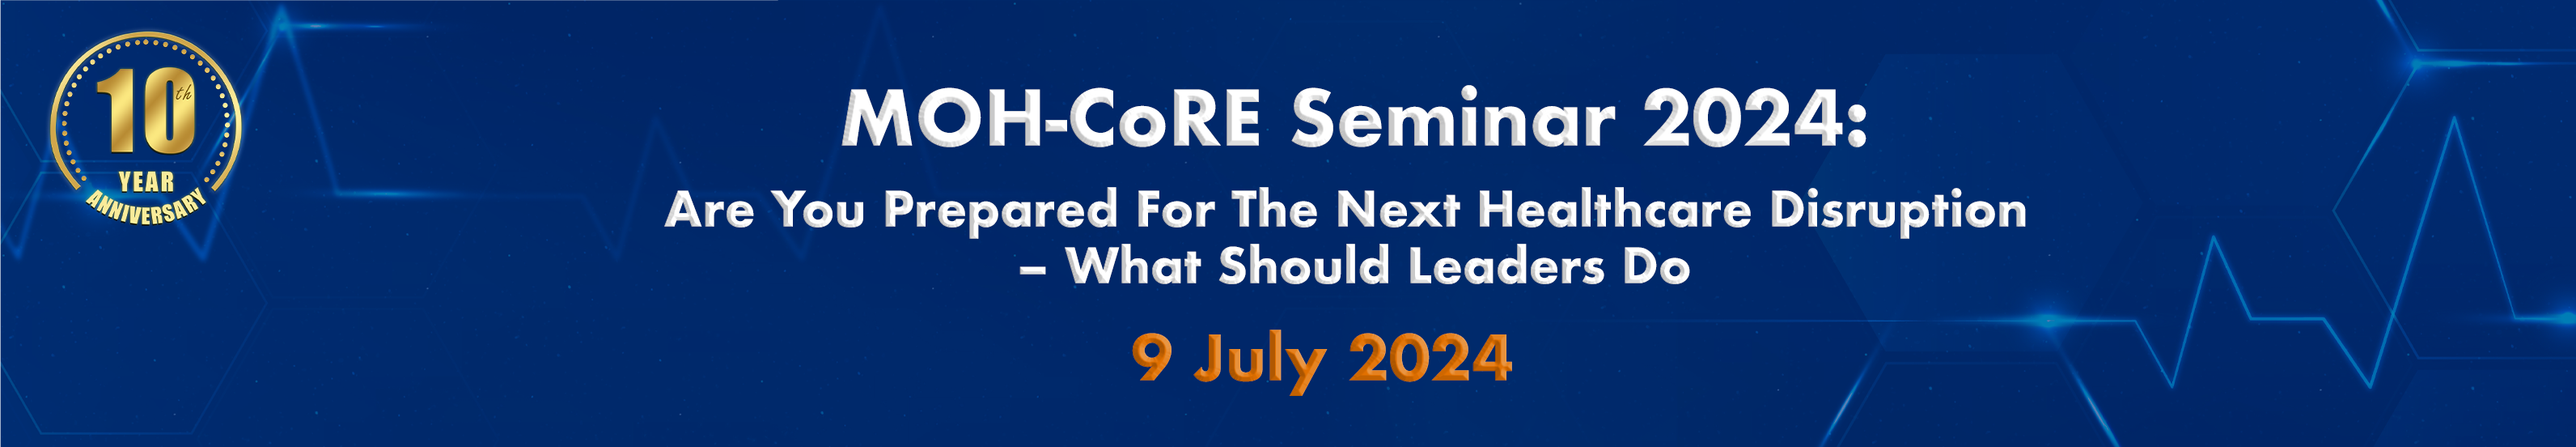 MoH-CoRE Seminar 2024 Landing Page